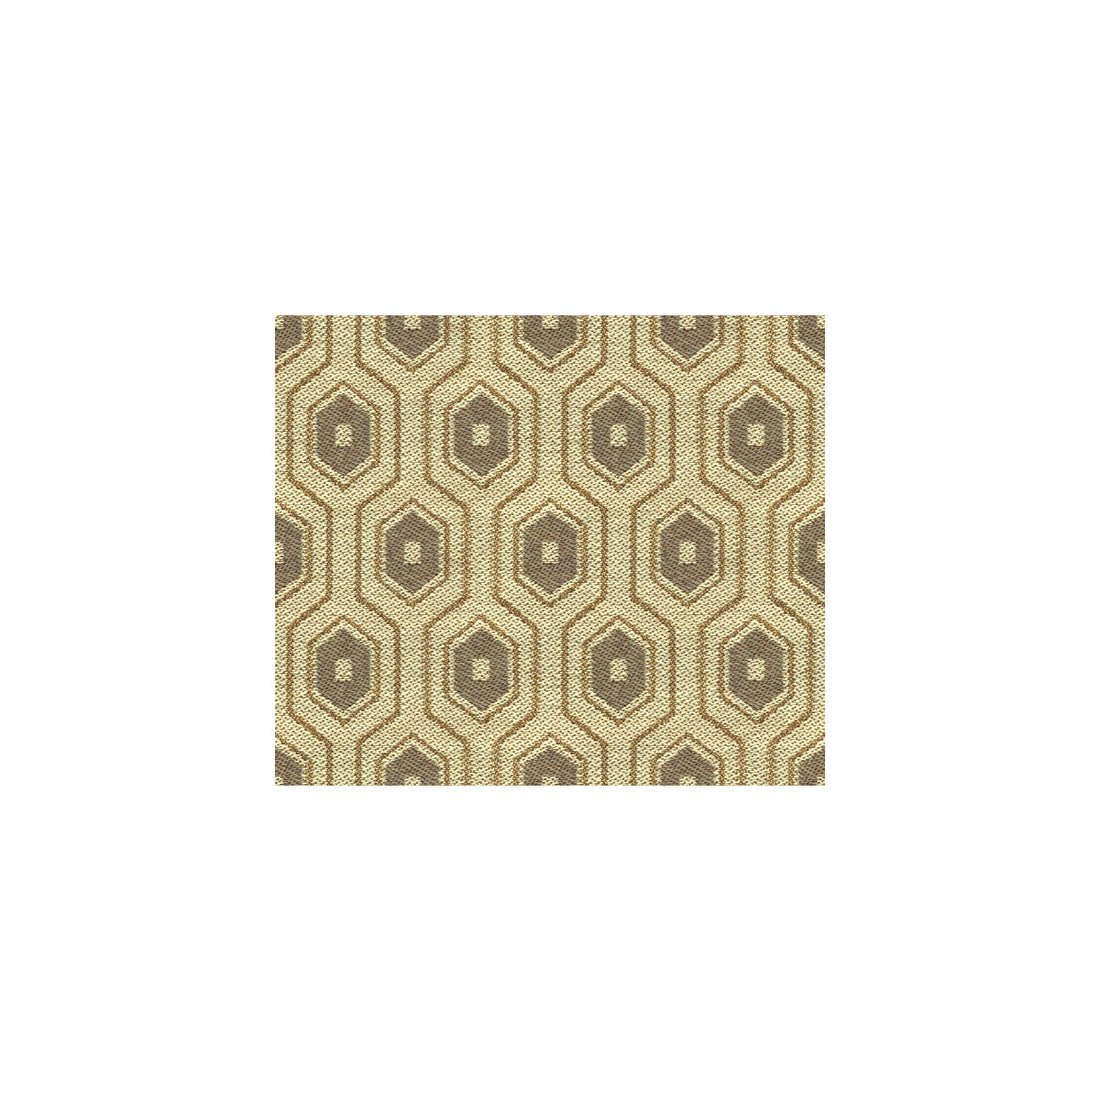 Kravet Smart fabric in 33016-11 color - pattern 33016.11.0 - by Kravet Smart